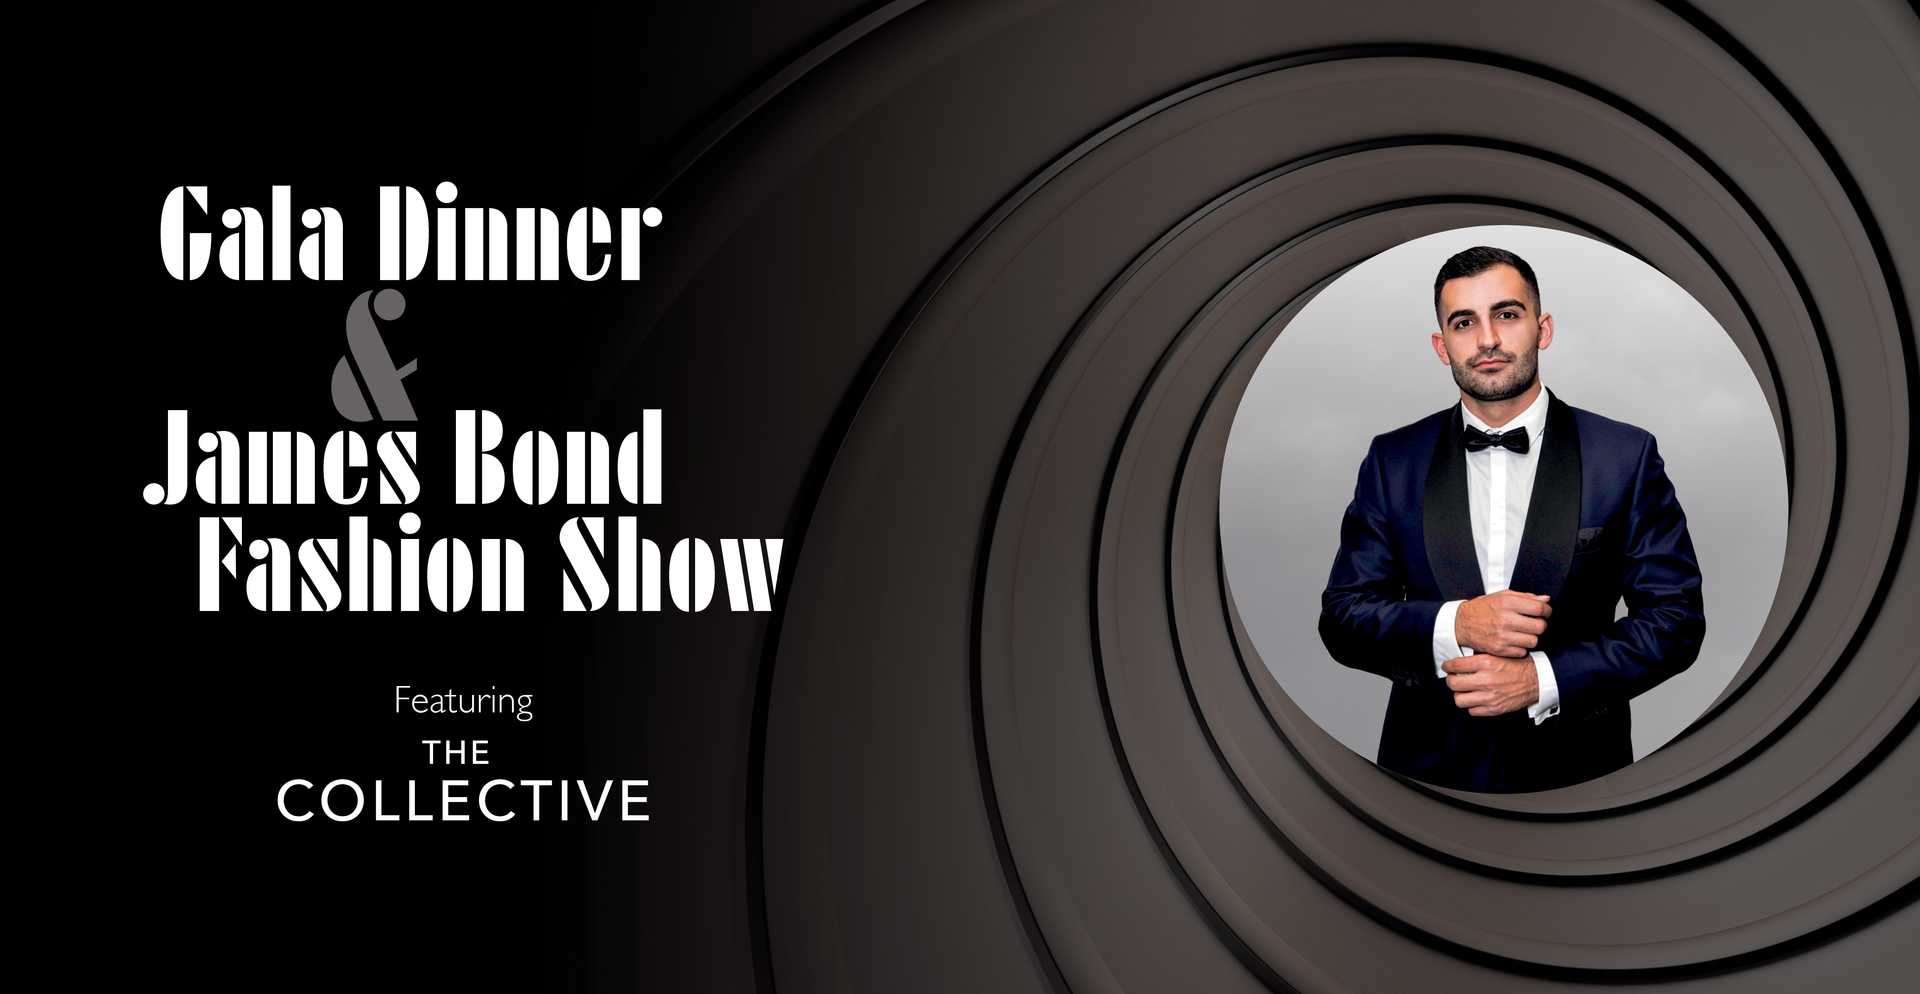 Gala Dinner and James Bond Fashion Show